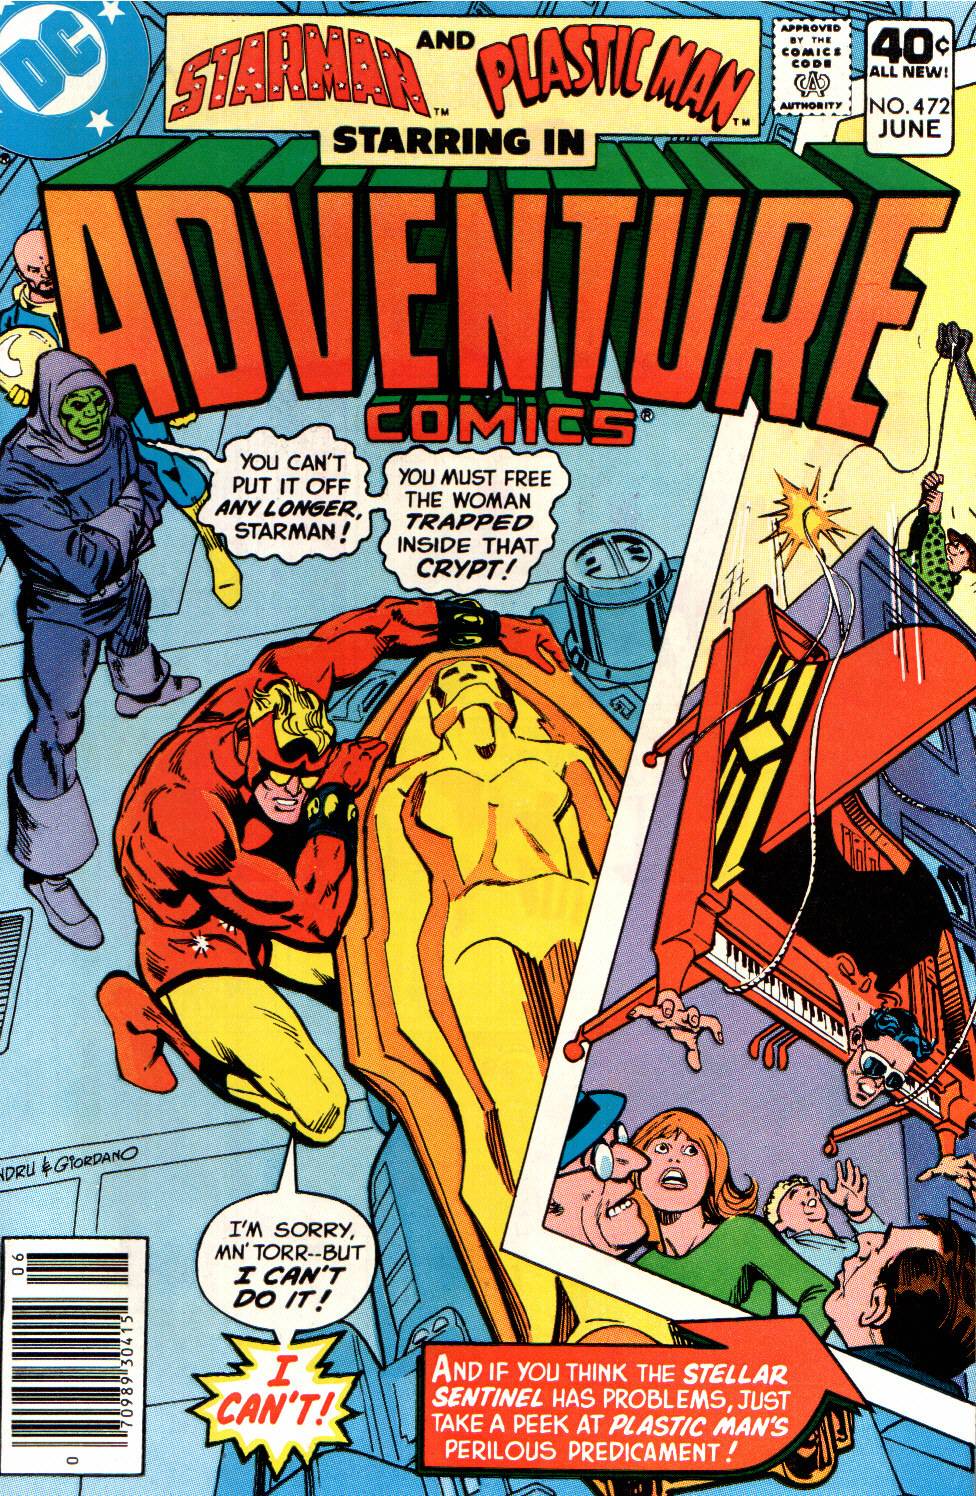 Days Of Adventure Adventure Comics 472 June 1980